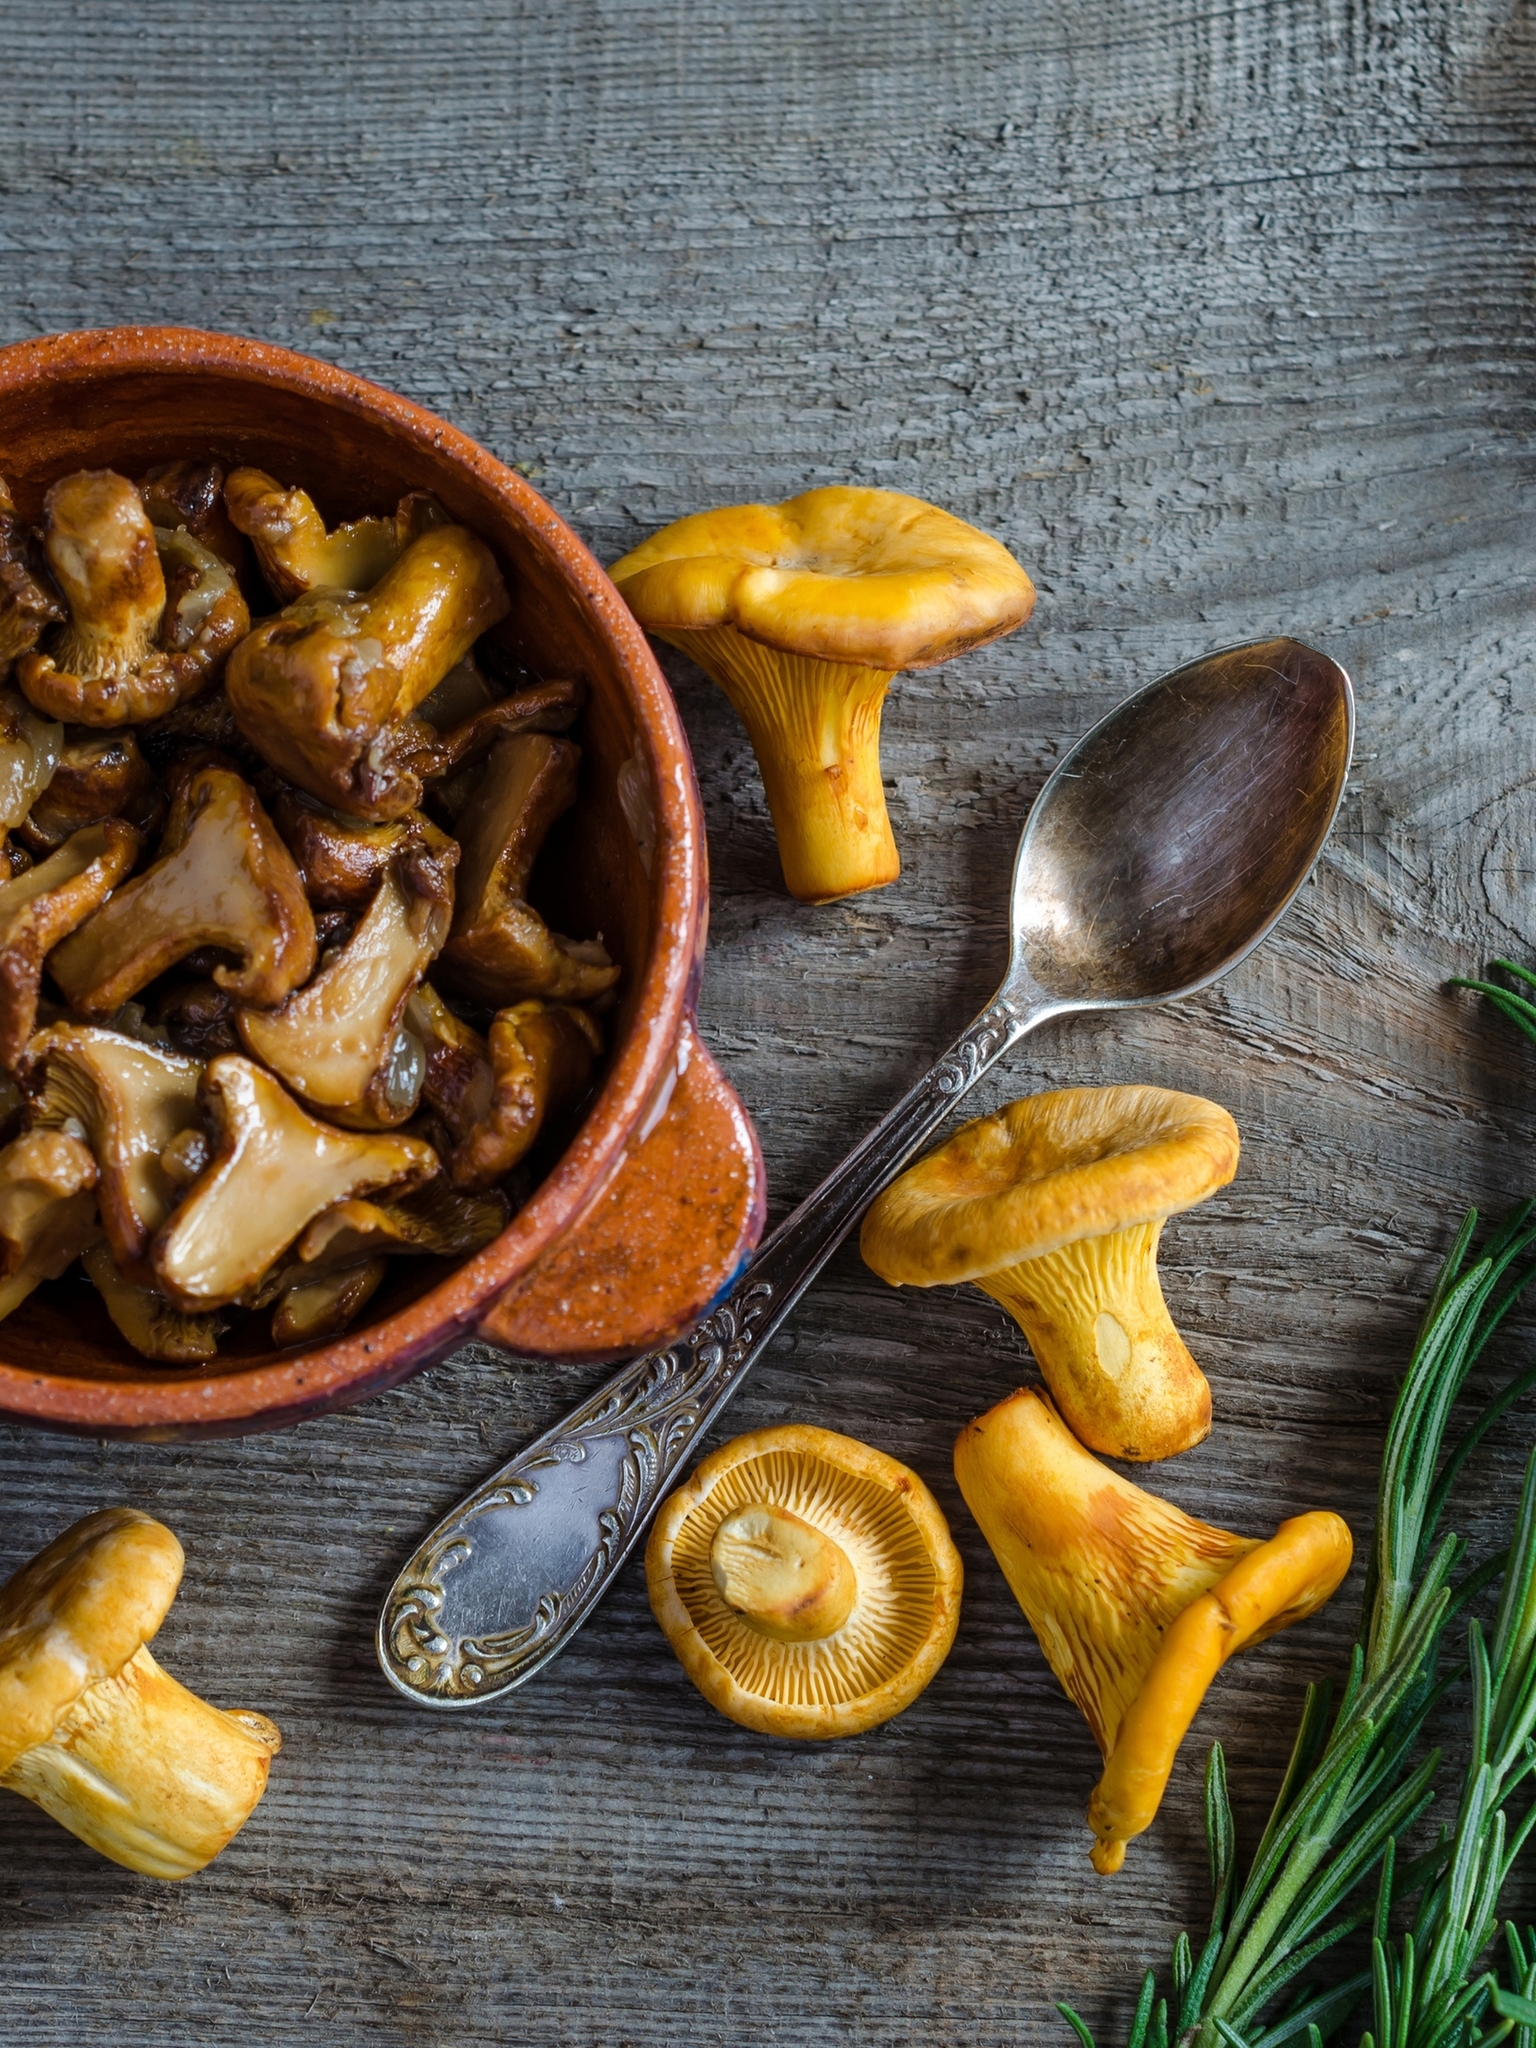 Image: Mushrooms, chanterelles, dill, spoon, pot